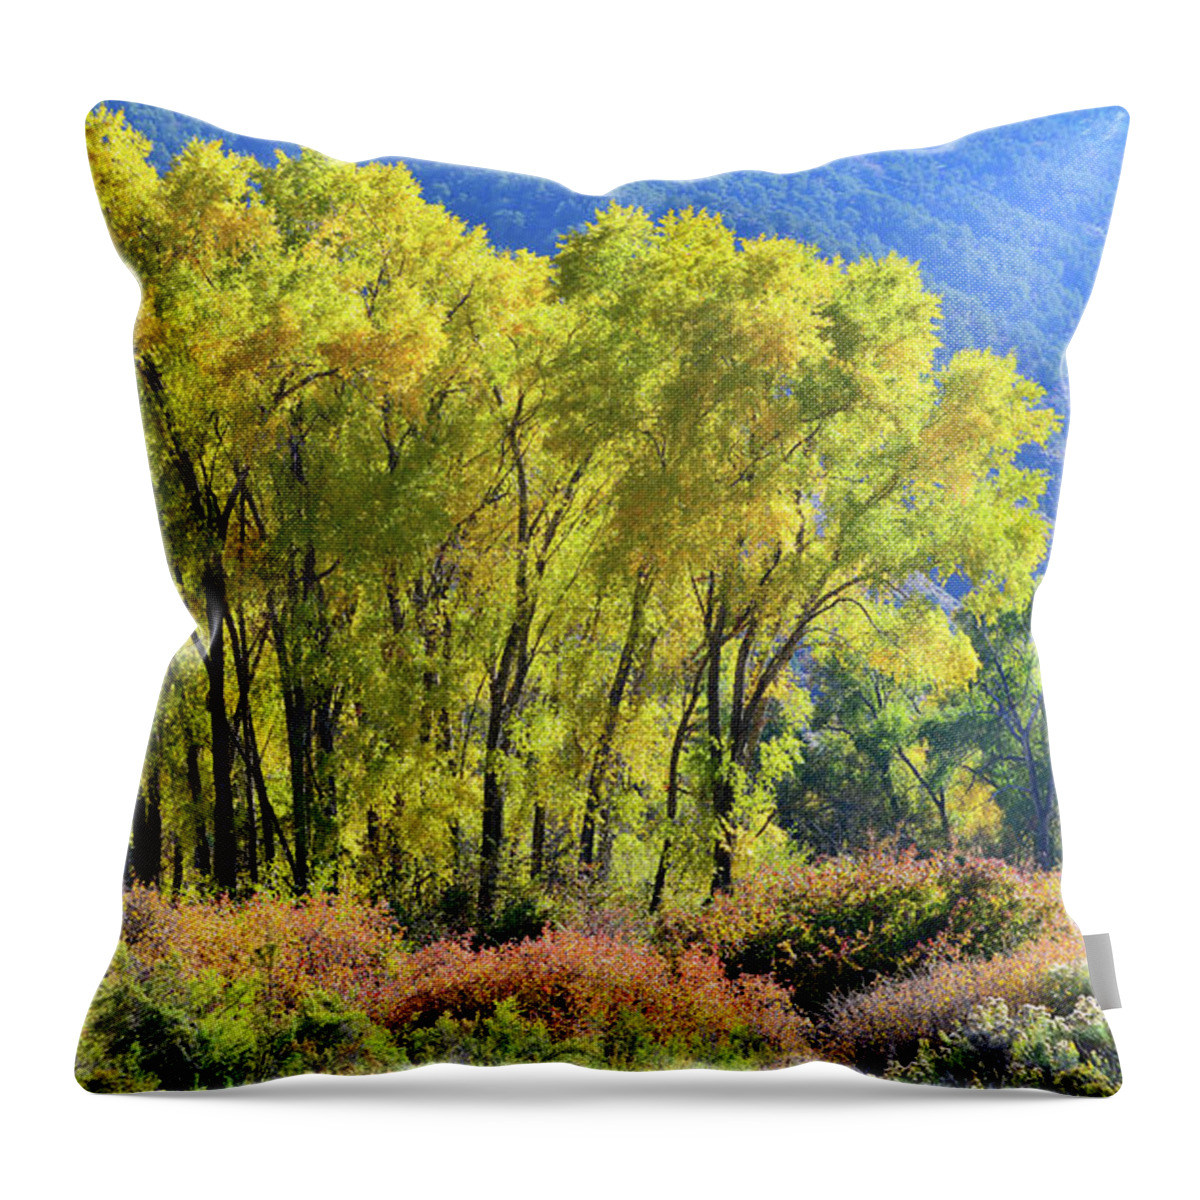 Colorado Throw Pillow featuring the photograph Fall Colors Along Colorado River near Silt by Ray Mathis